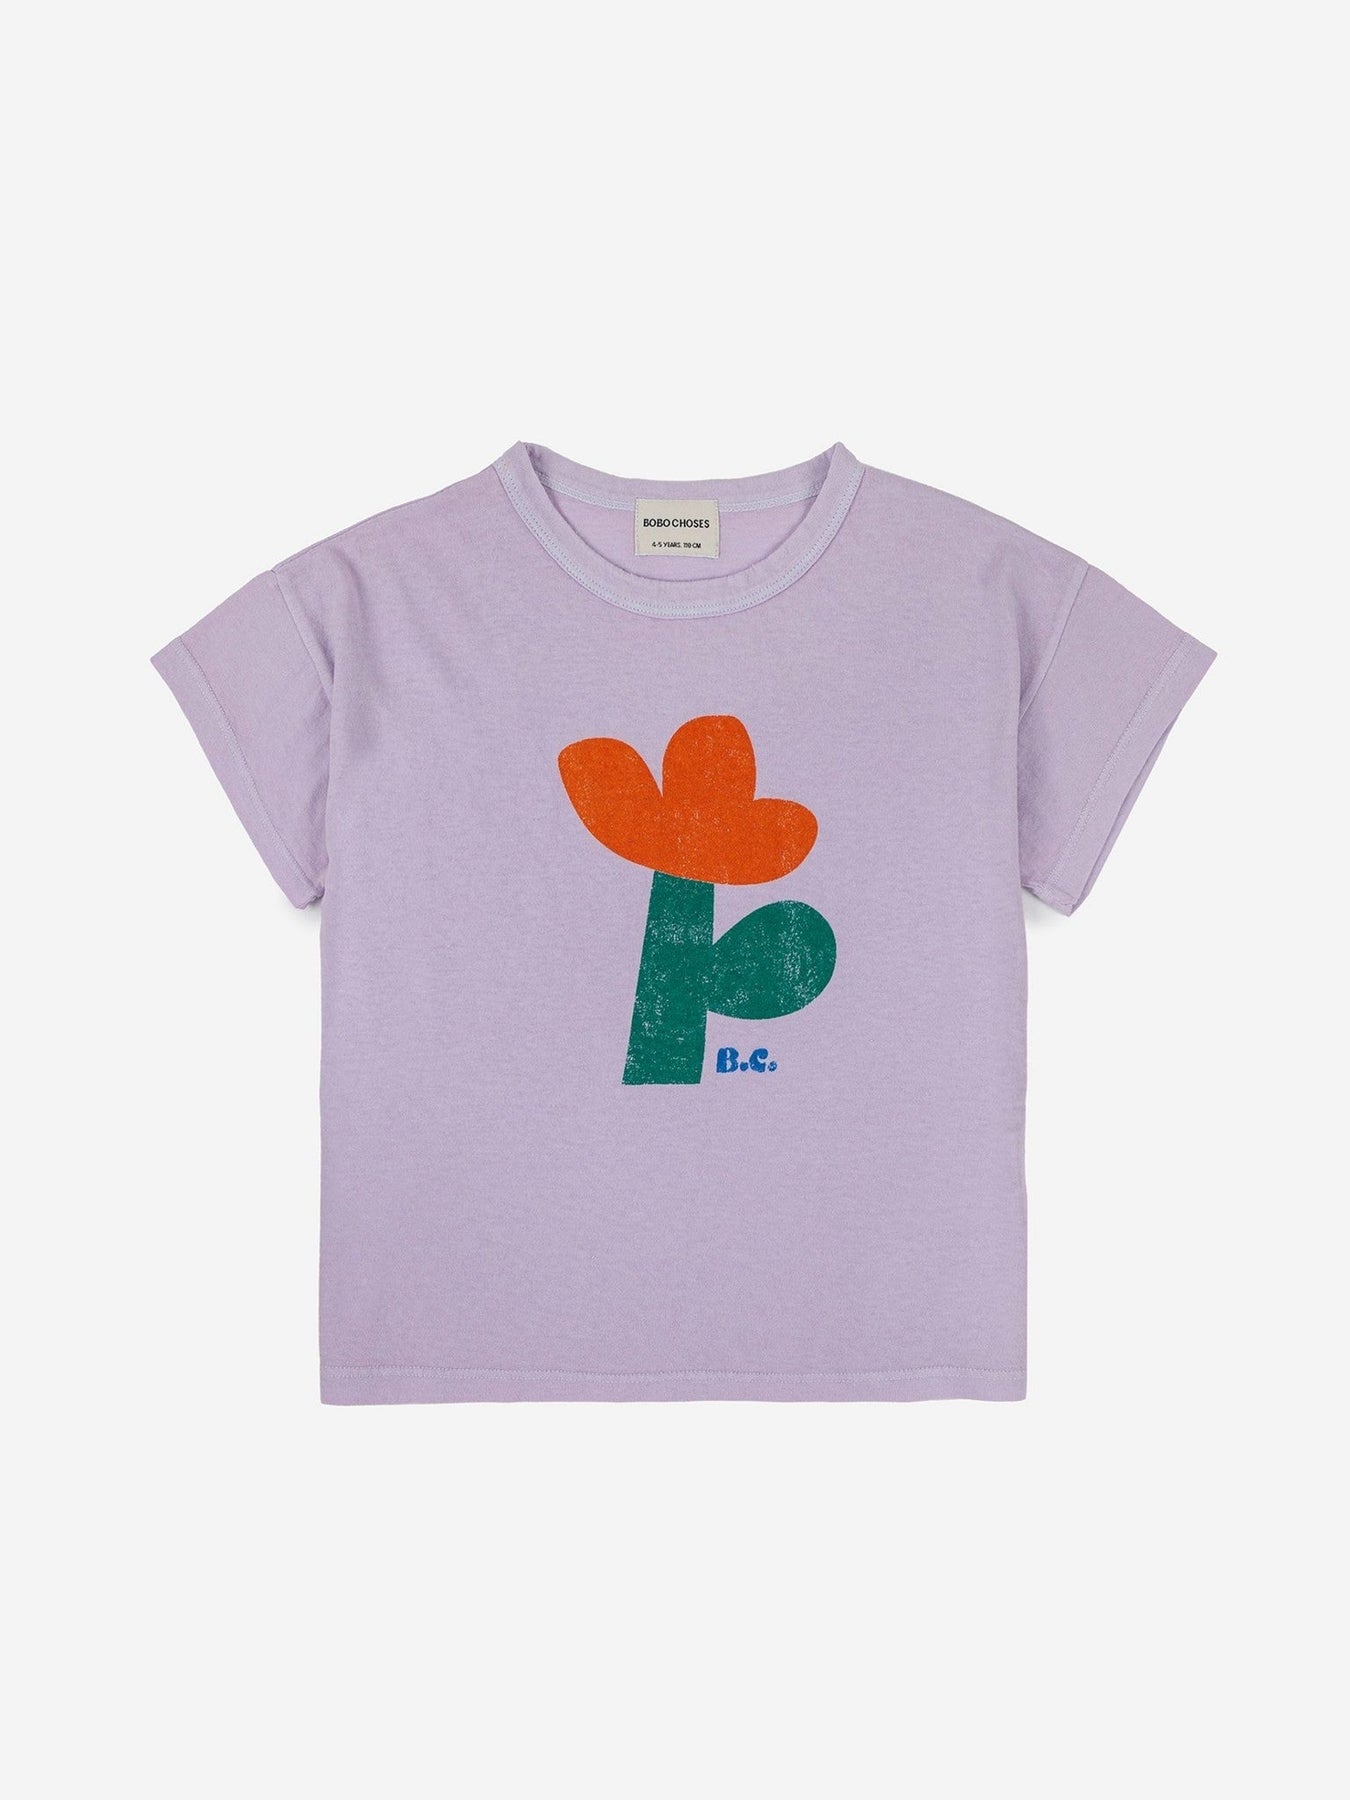 Sea Flower T-shirt - Pilzessin.at - zauberhafte Kinderdinge